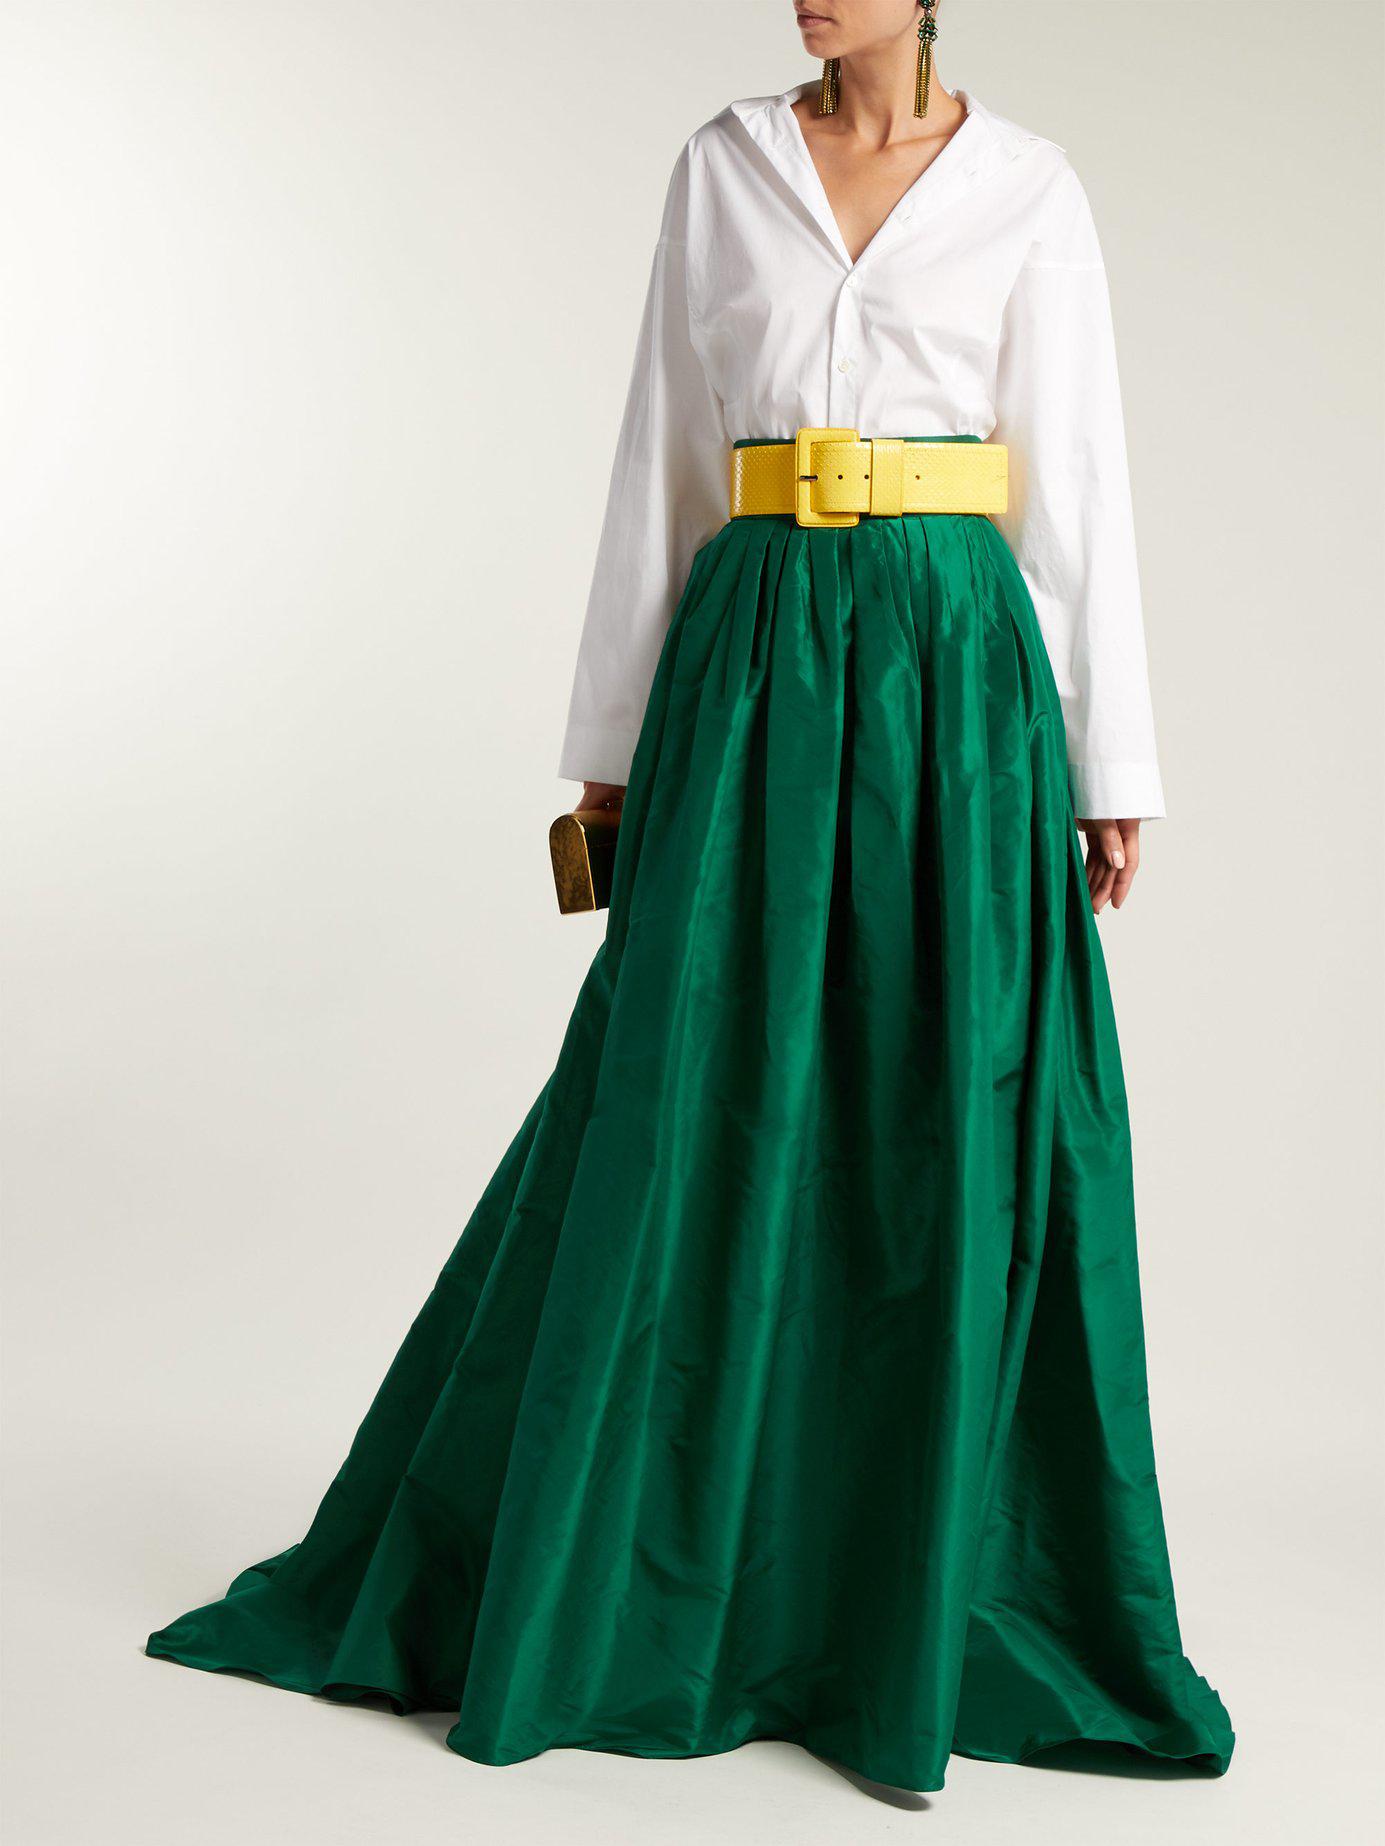 Carolina Herrera High Rise Silk Taffeta Ball Gown Skirt in Green - Lyst